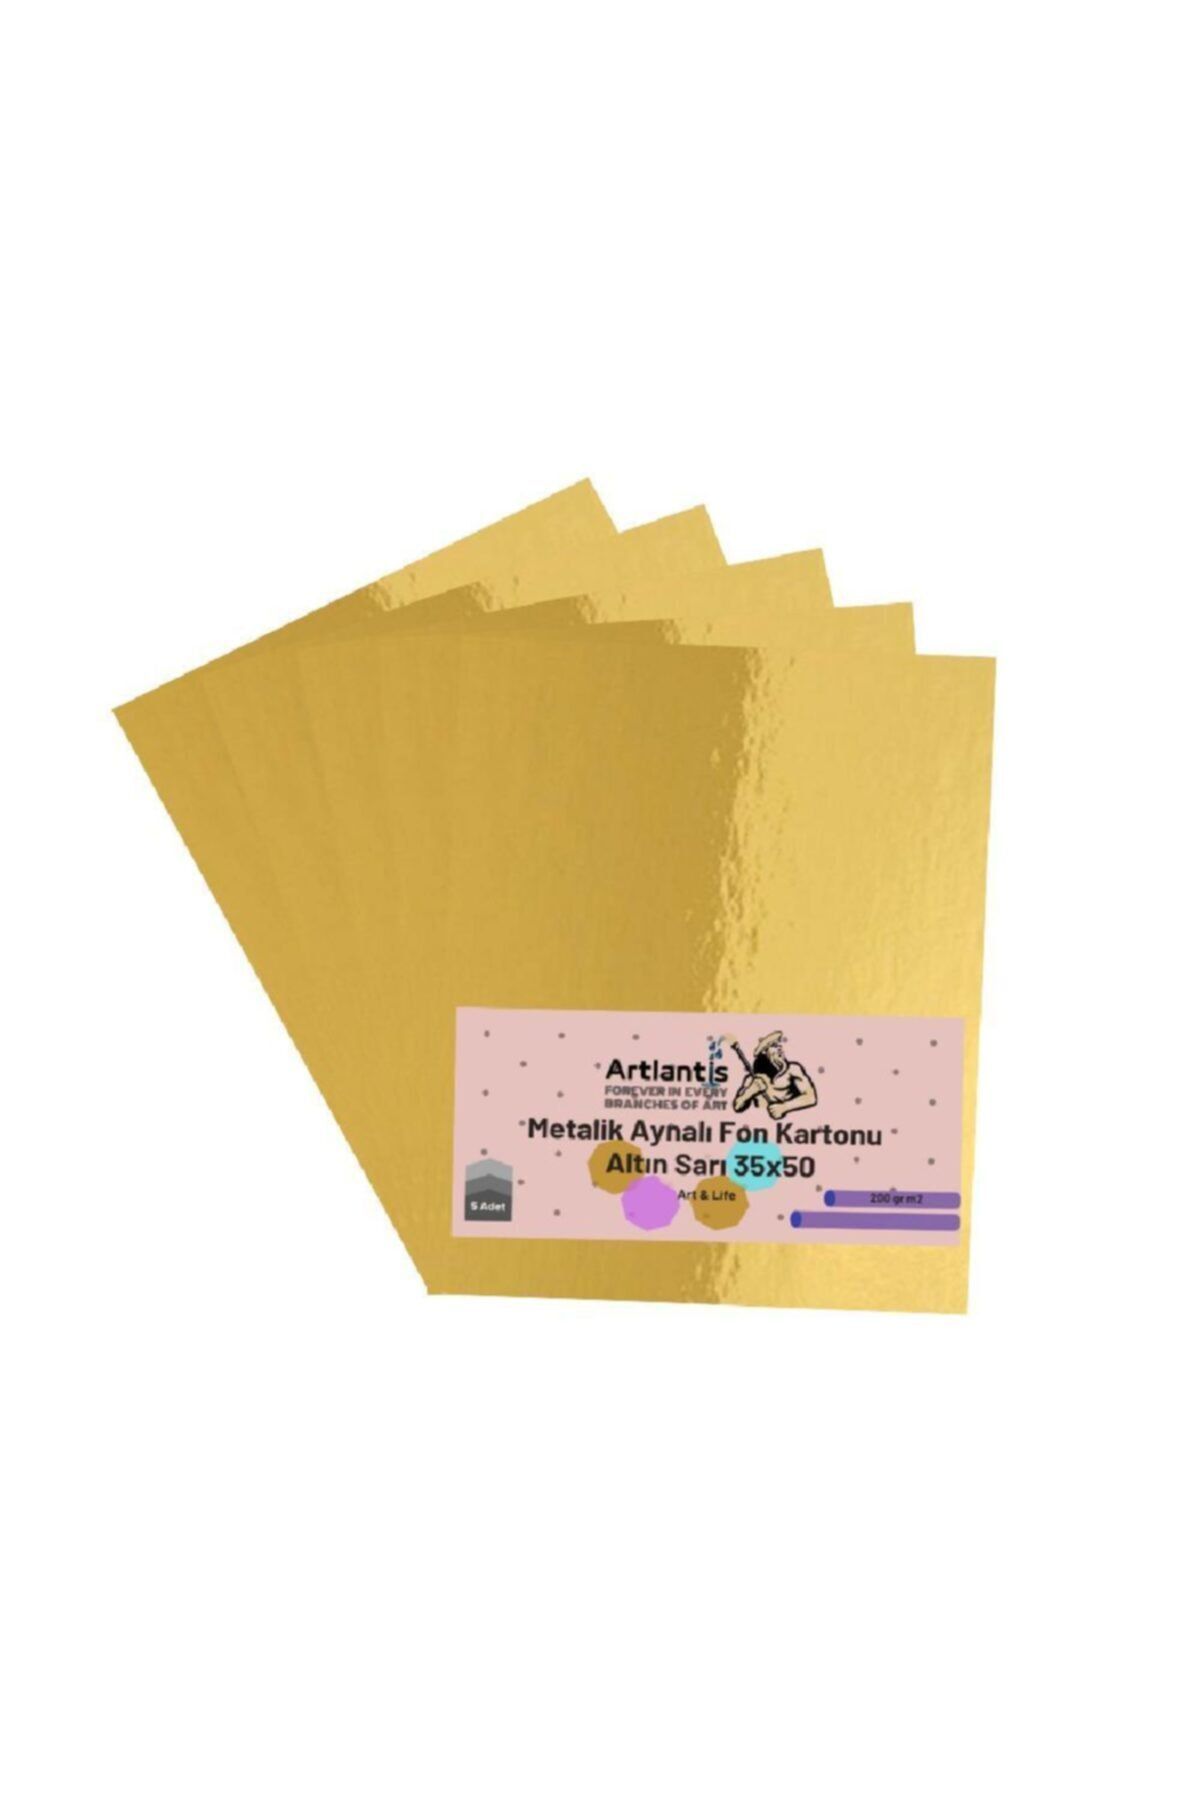 Artlantis Altın Sarı 35x50 Metalik Aynalı Fon Kartonu 5 Adet 1 Paket Aynalı Metalik Fon Kartonu